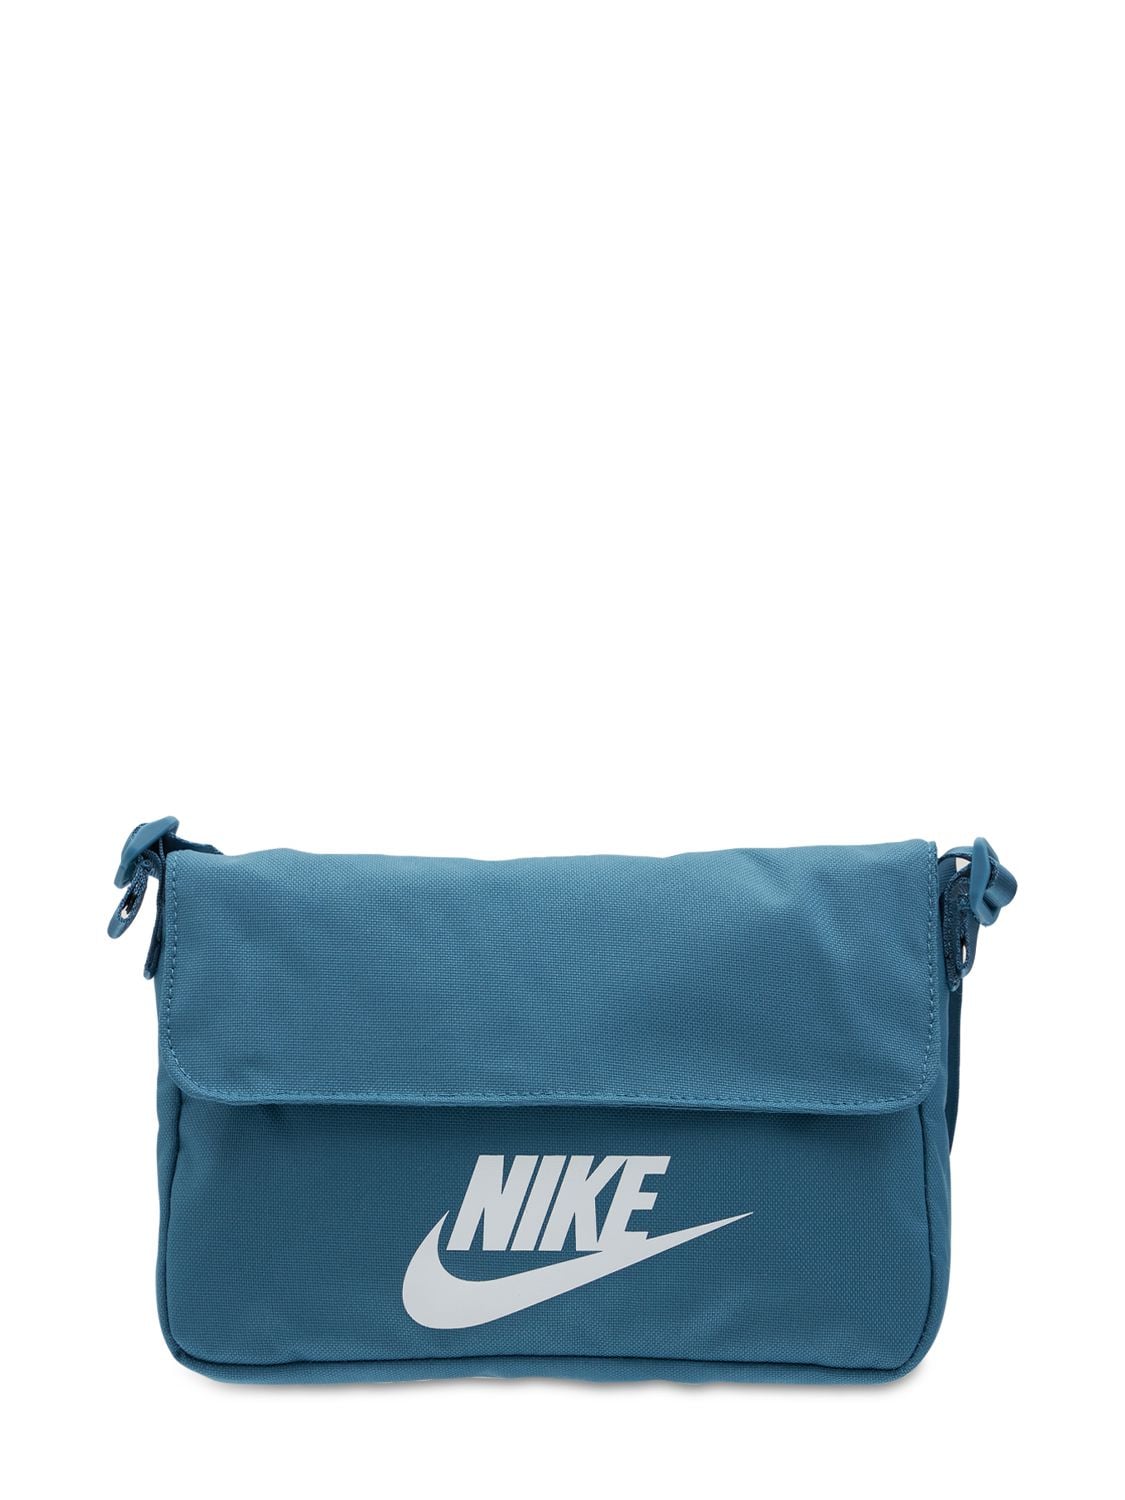 Nike Crossbody Bag In Blue